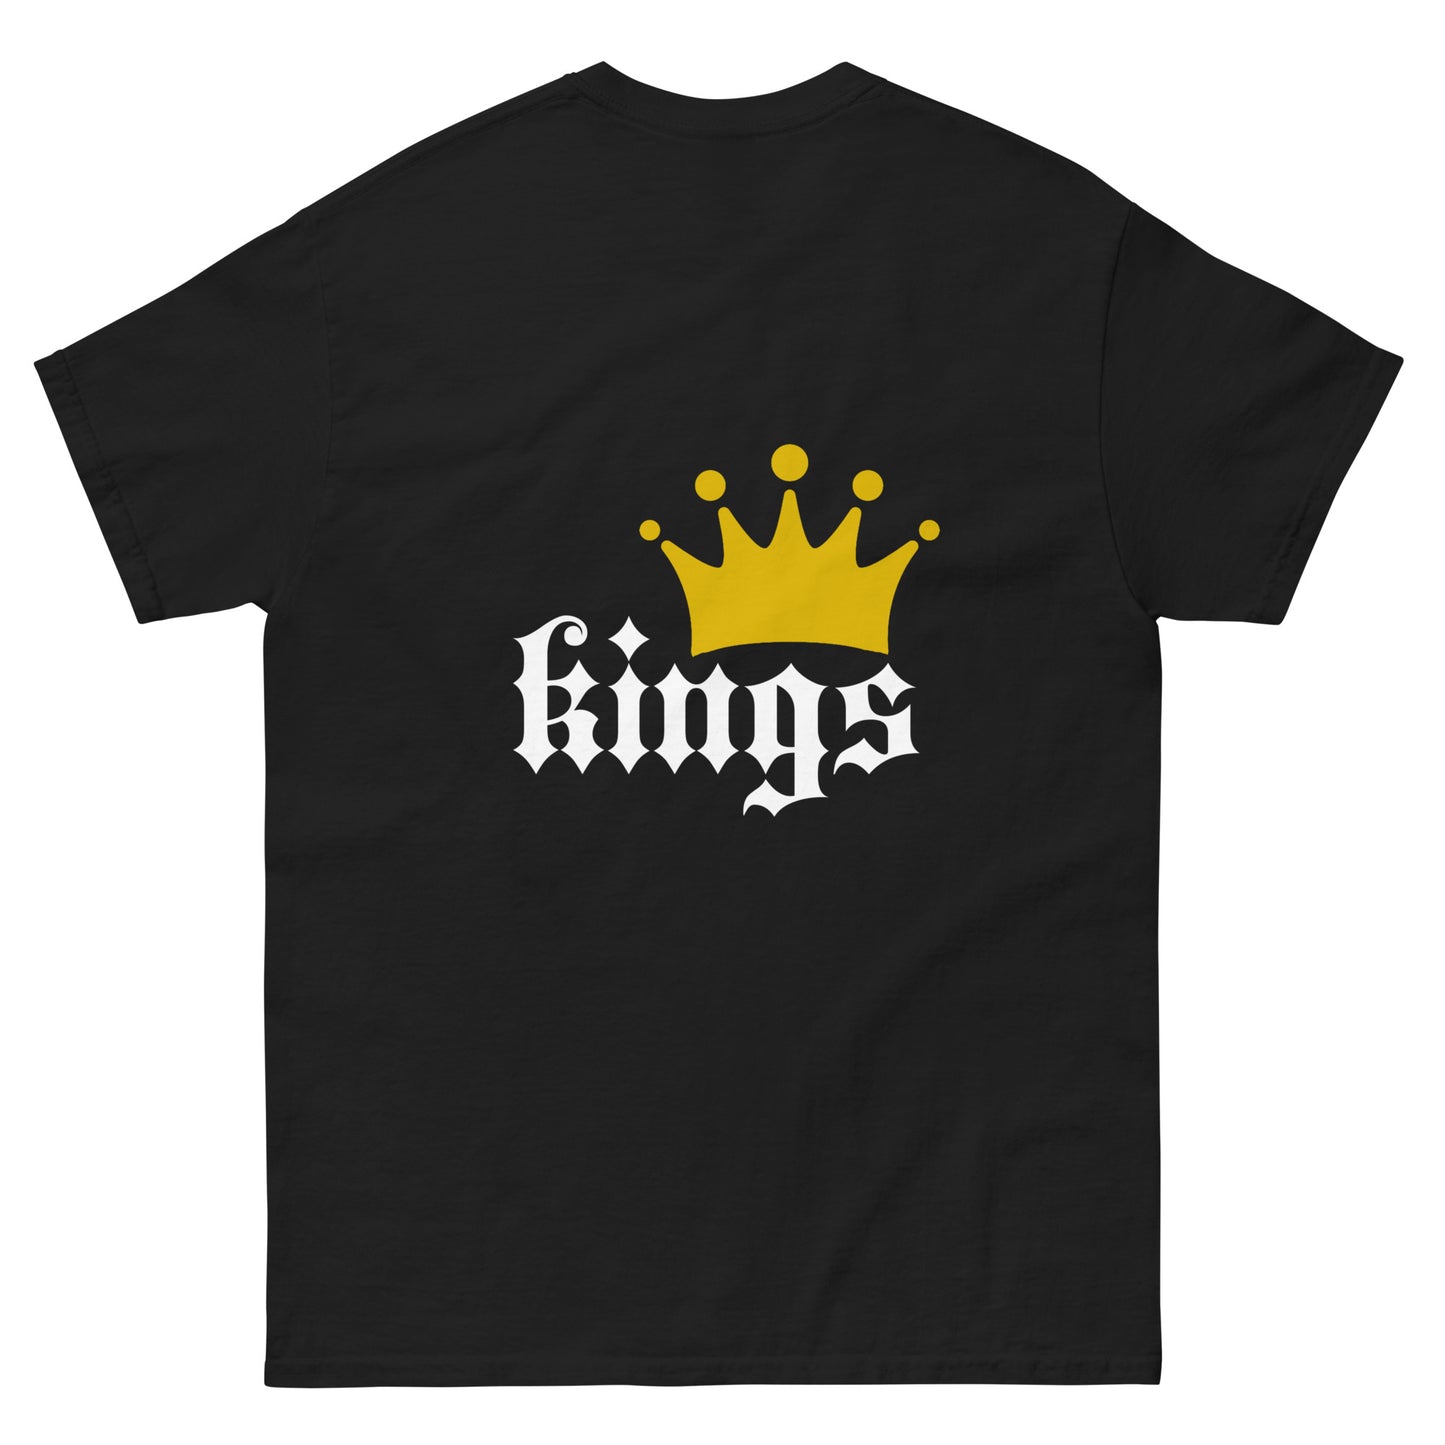 Classic Kings T-Shirt - Unisex